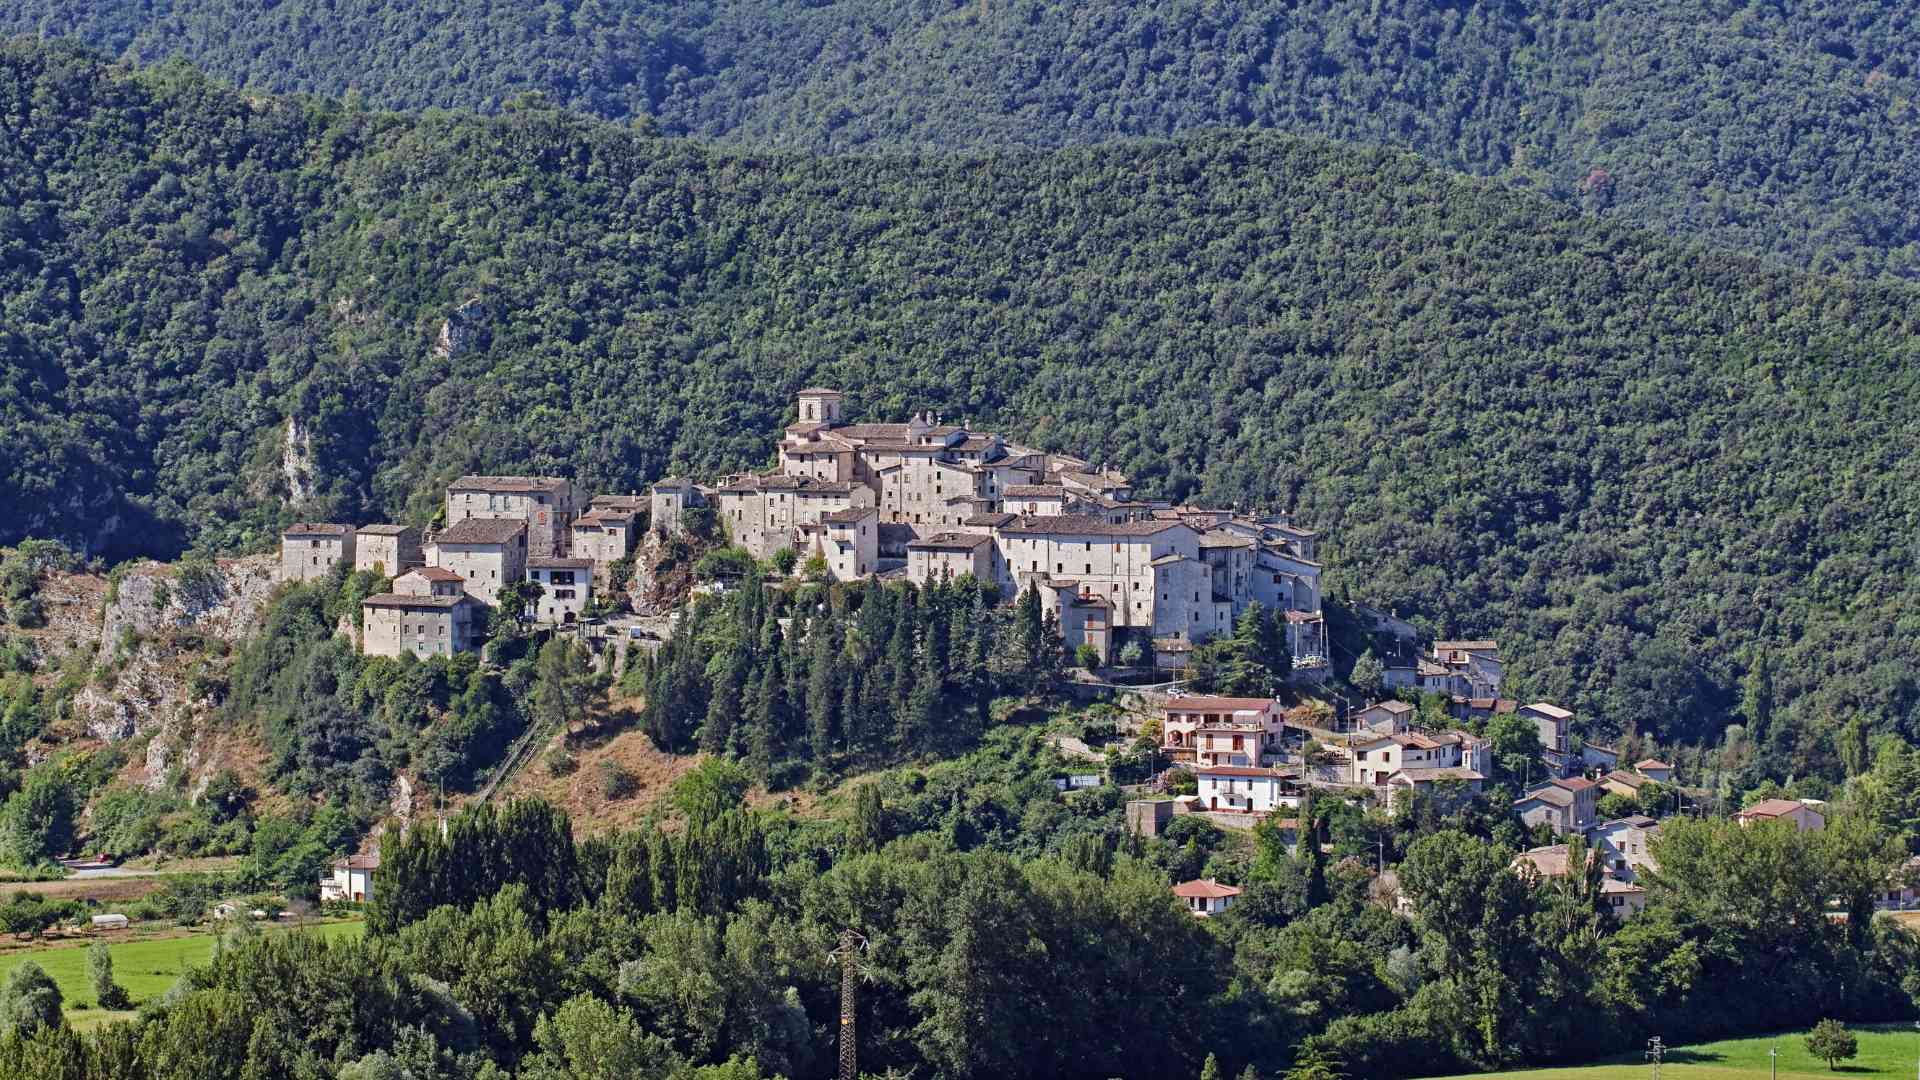 Il borgo di Casteldilago in Valnerina